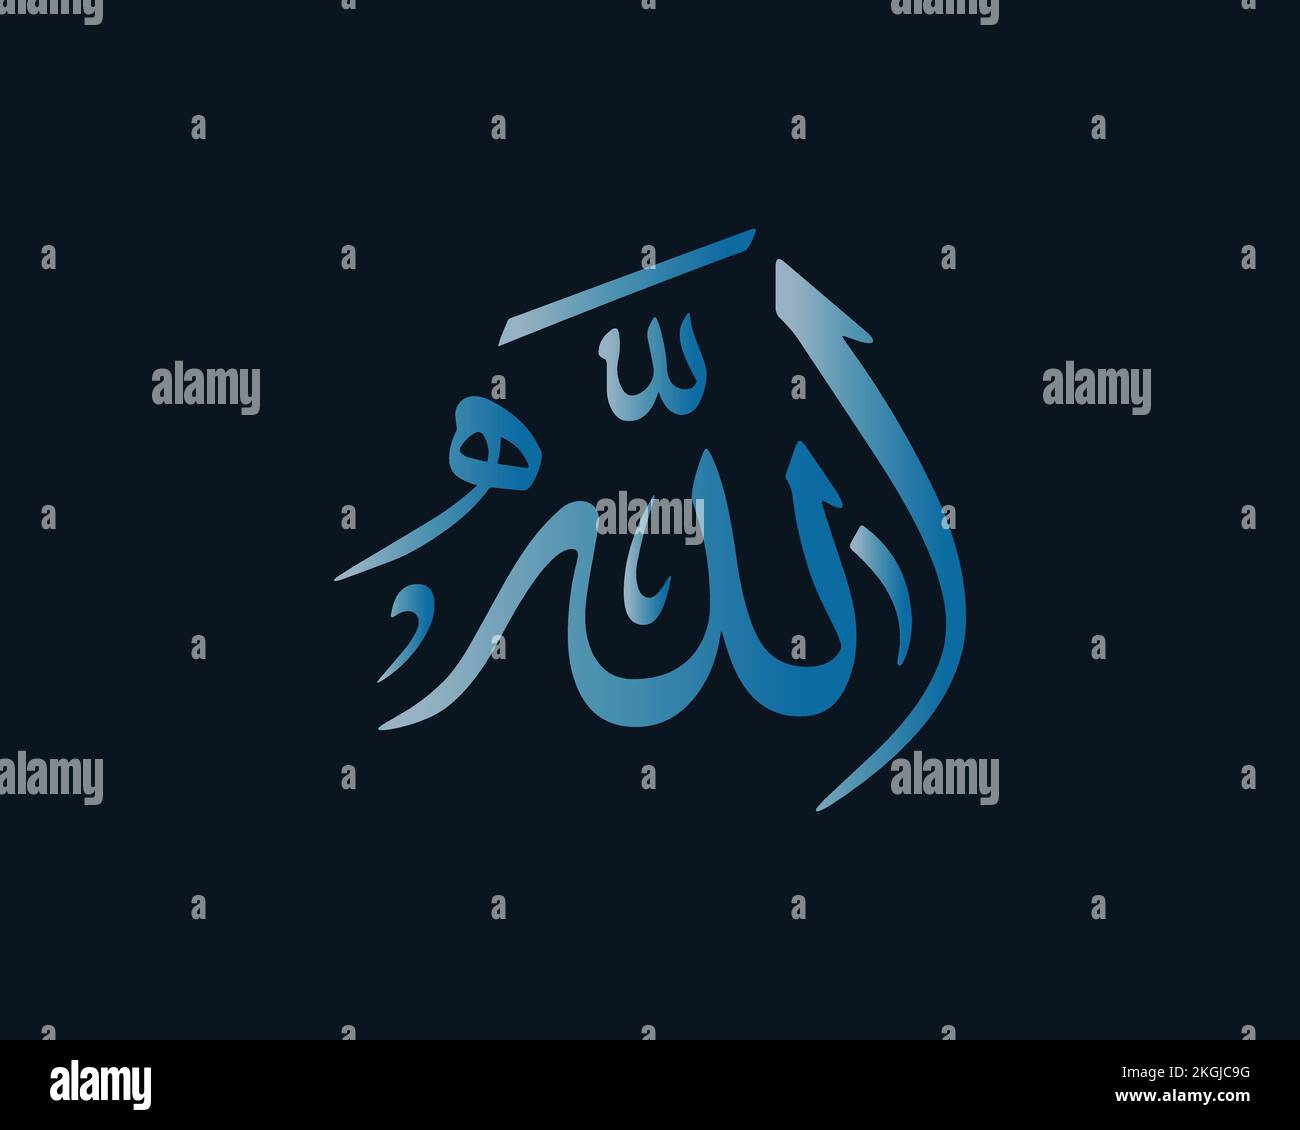 Allah Names Vector Hd Images, 99 Name Of Allah Al Alim Vector With Meaning,  Al Alim, 99 Names Of Allah, Allah PNG Image For Free Download